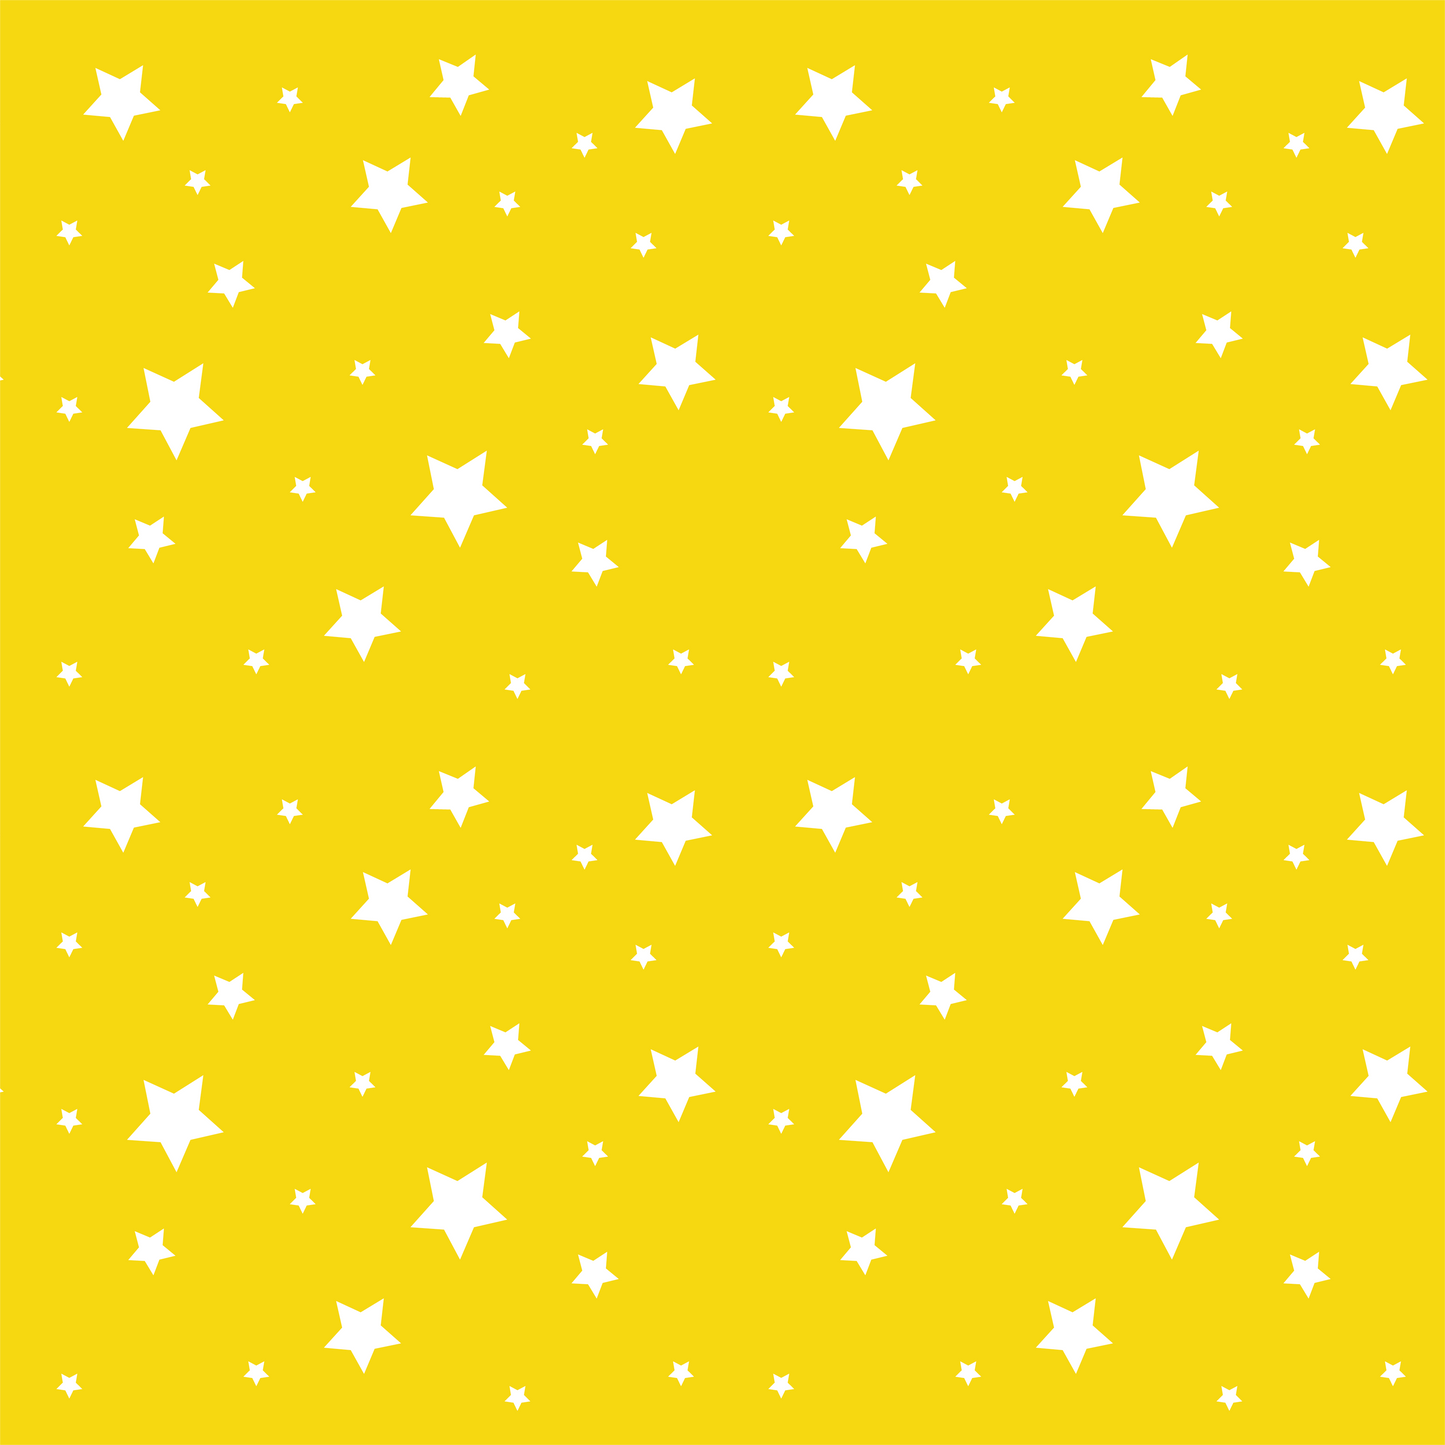 Stars on Yellow Background 001